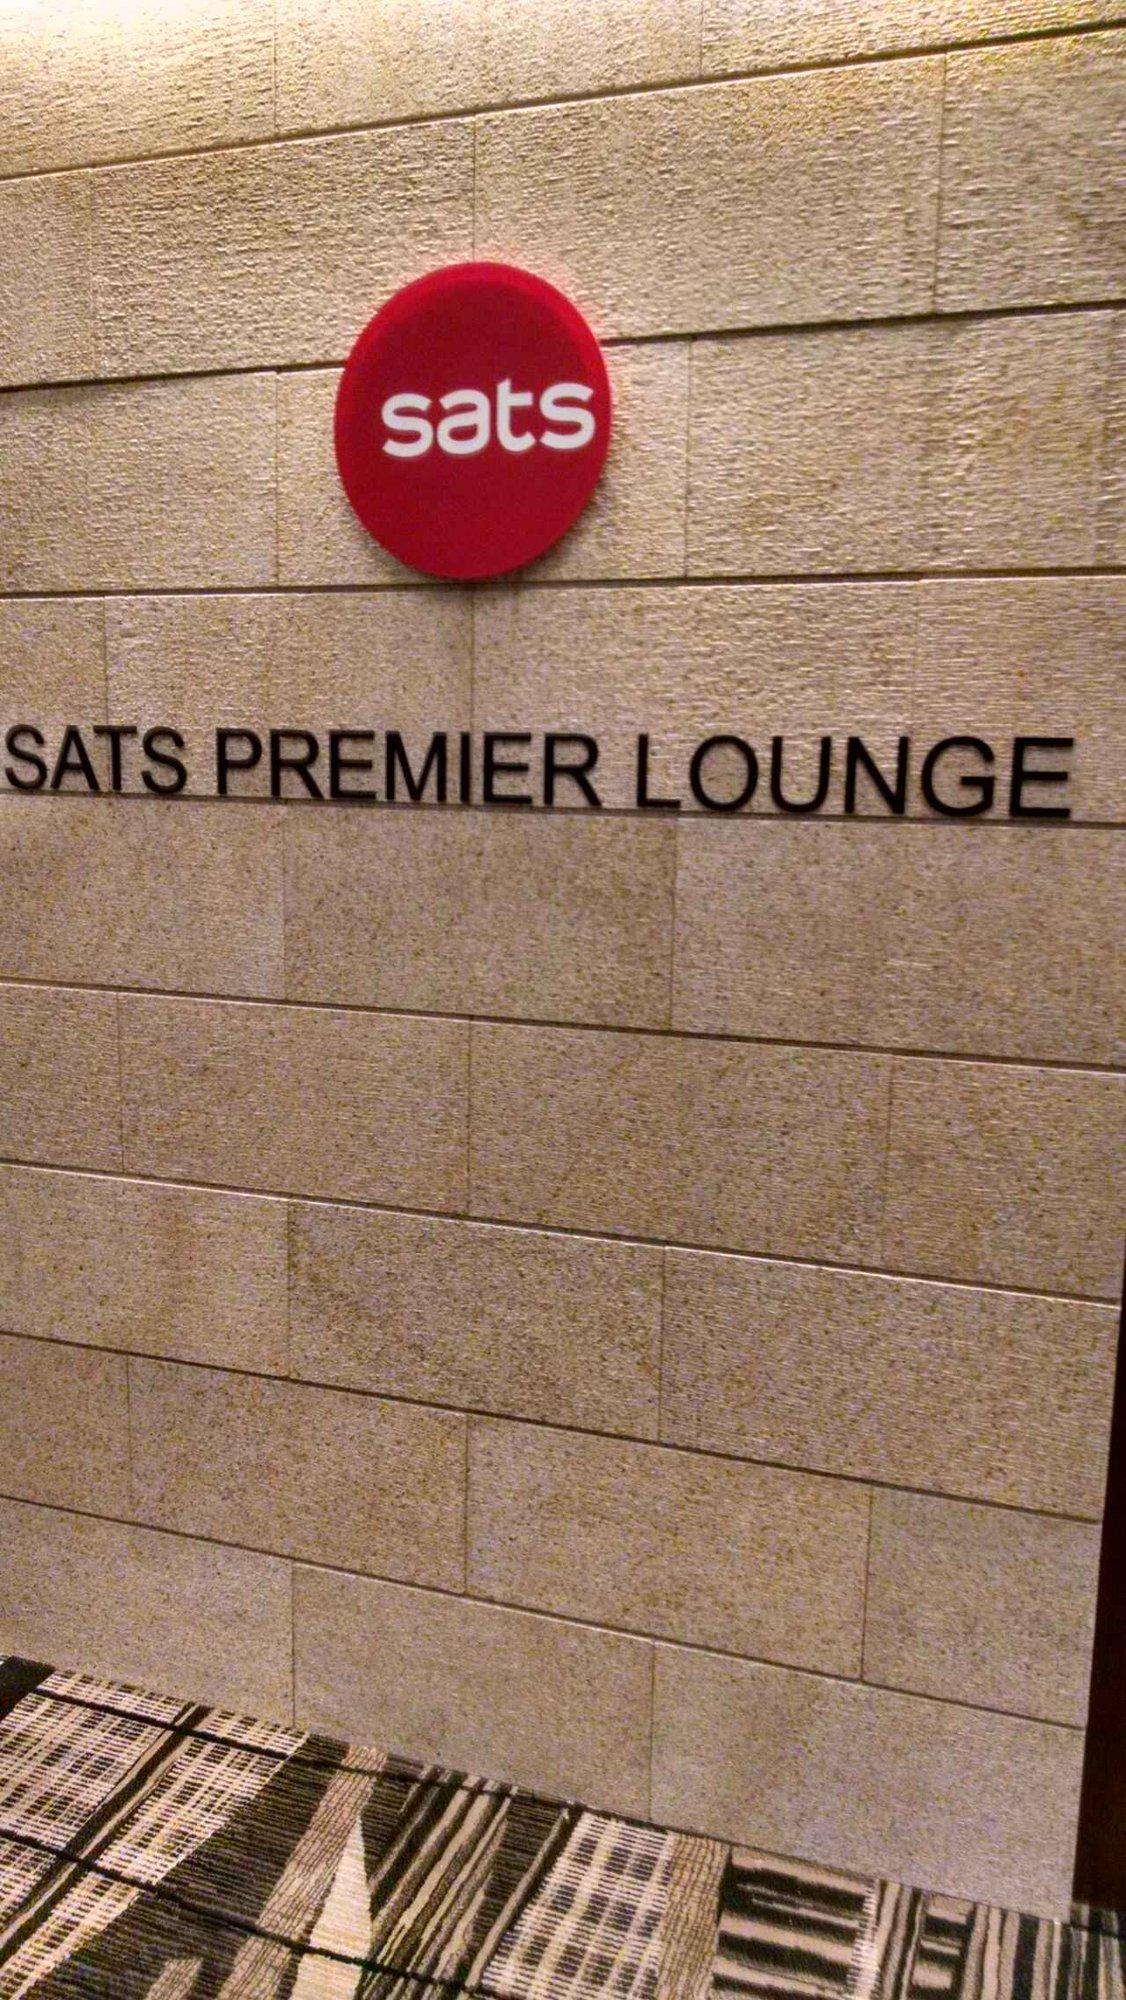 SATS Premier Lounge image 20 of 61